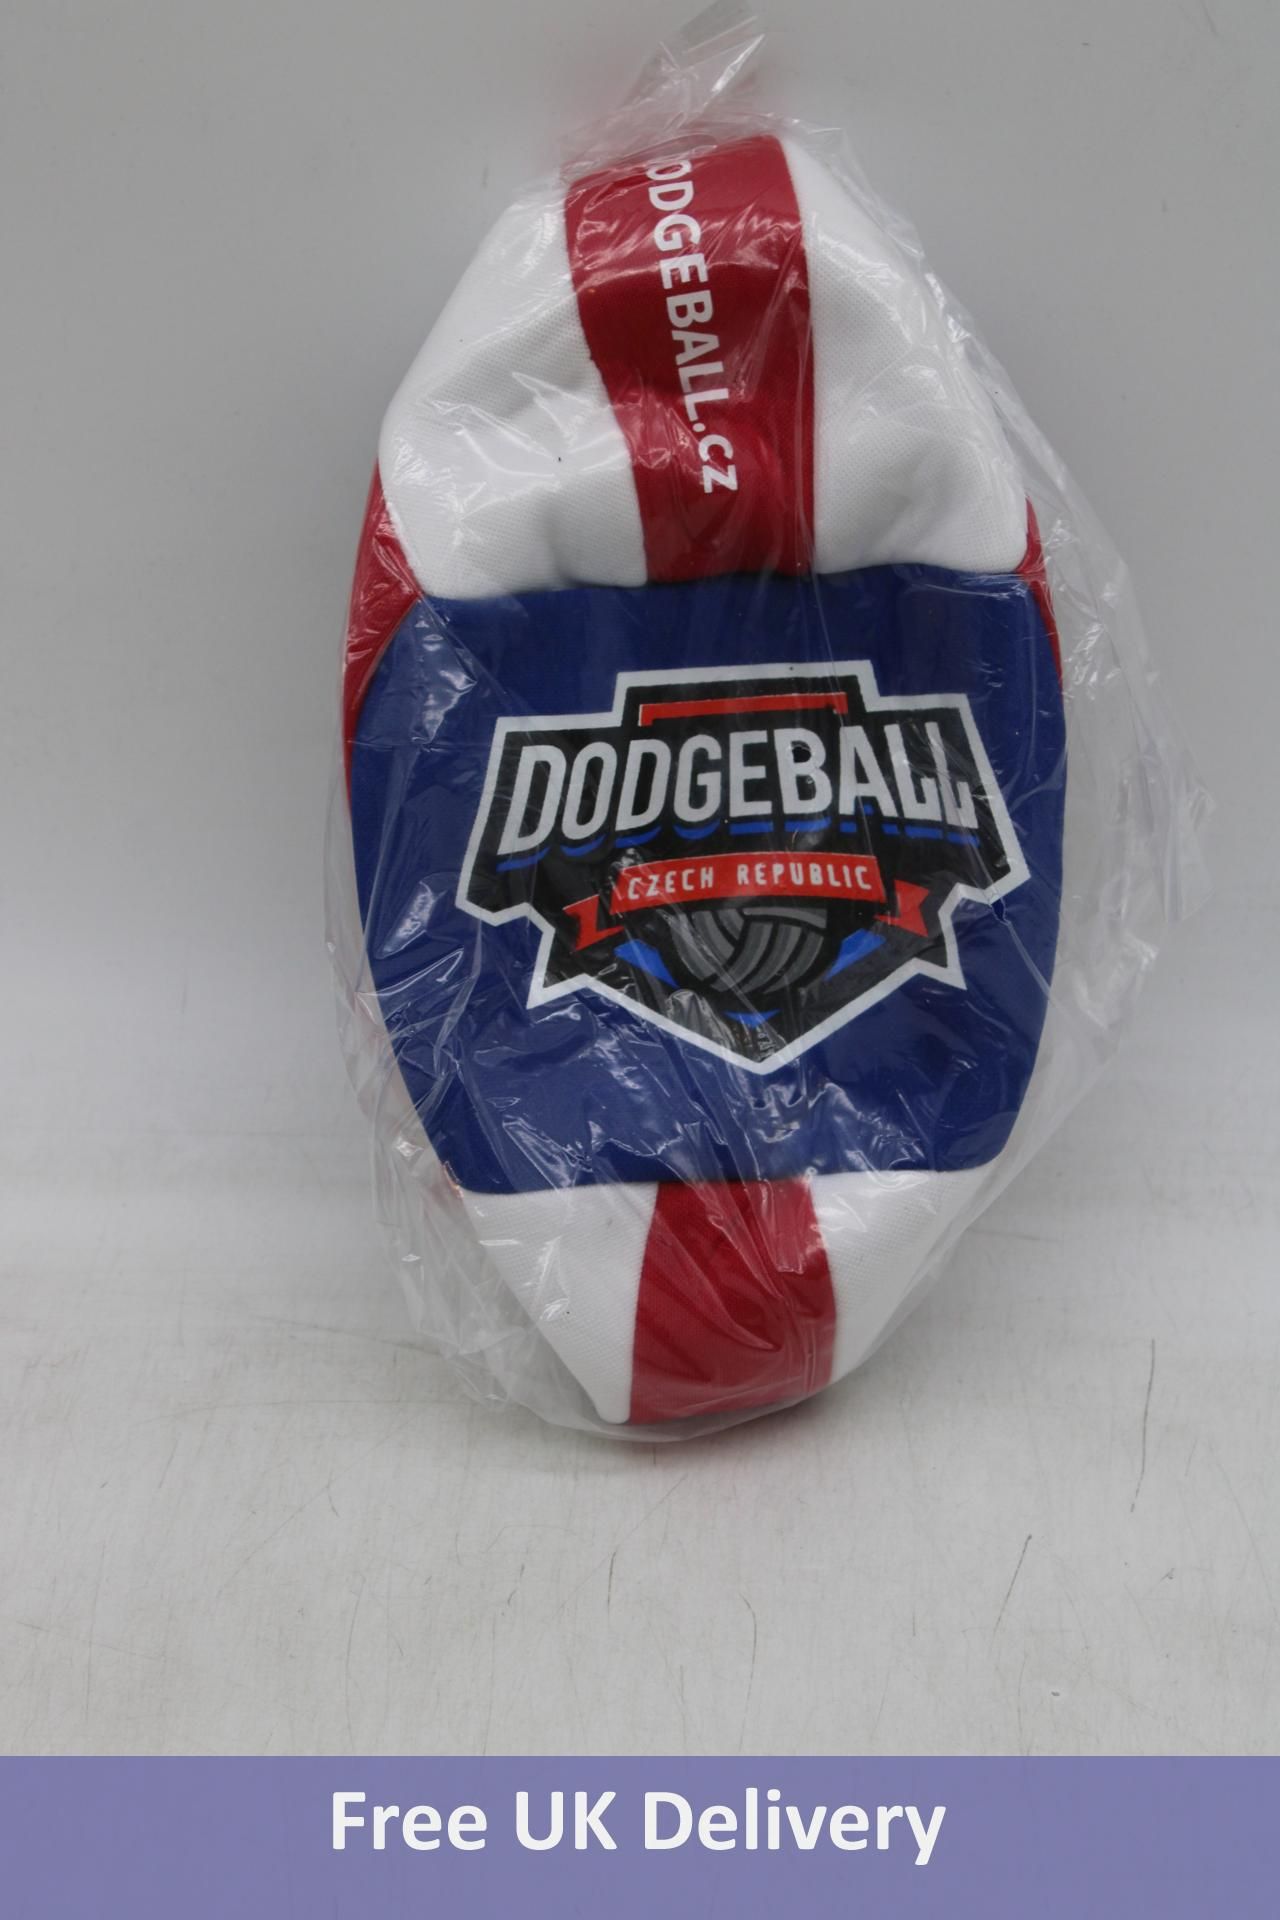 Approximately 100x Czech Republic Cloth Dodgeballs